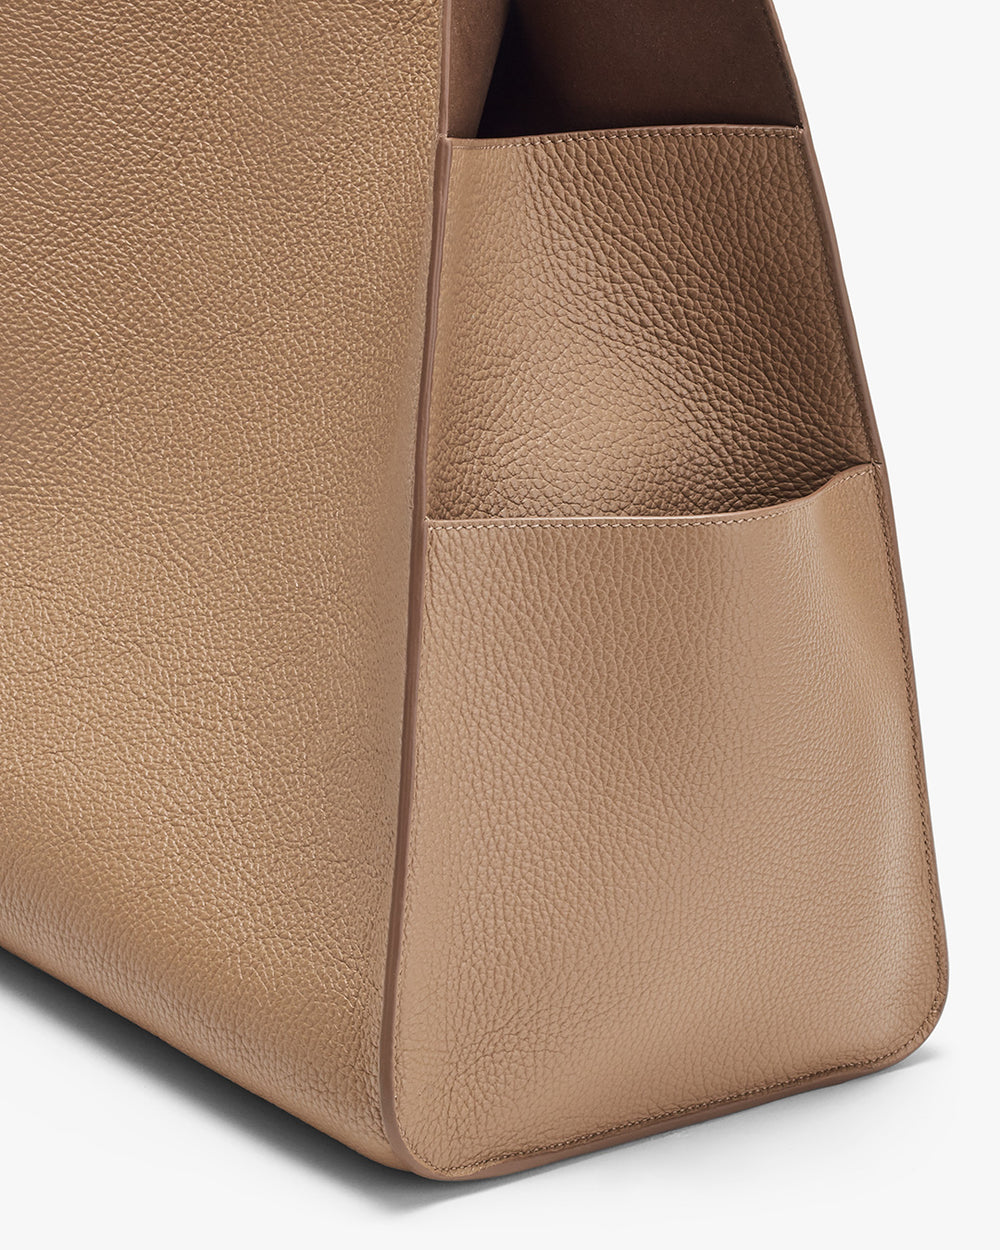 Close-up of a textured handbag with a visible side pocket.